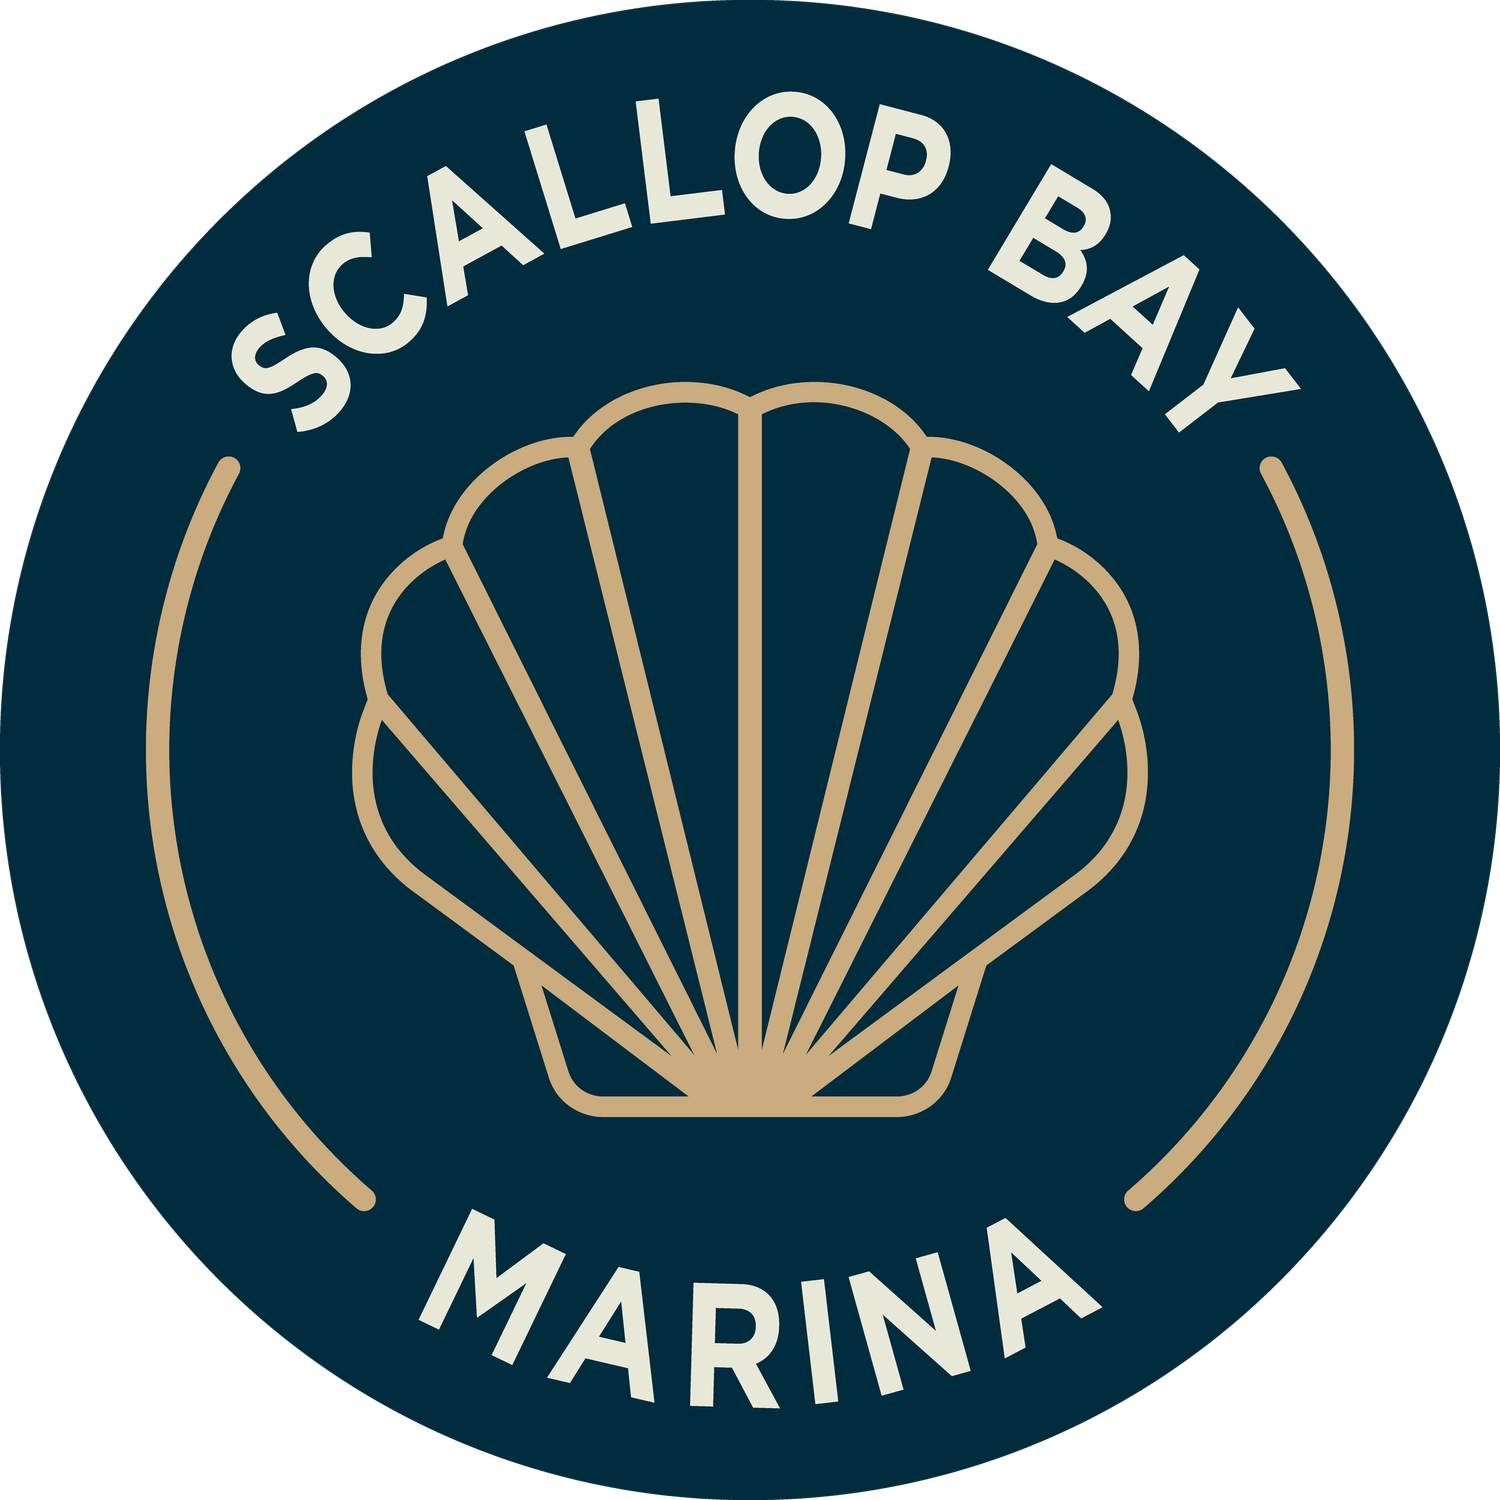 Scallop Bay Marina